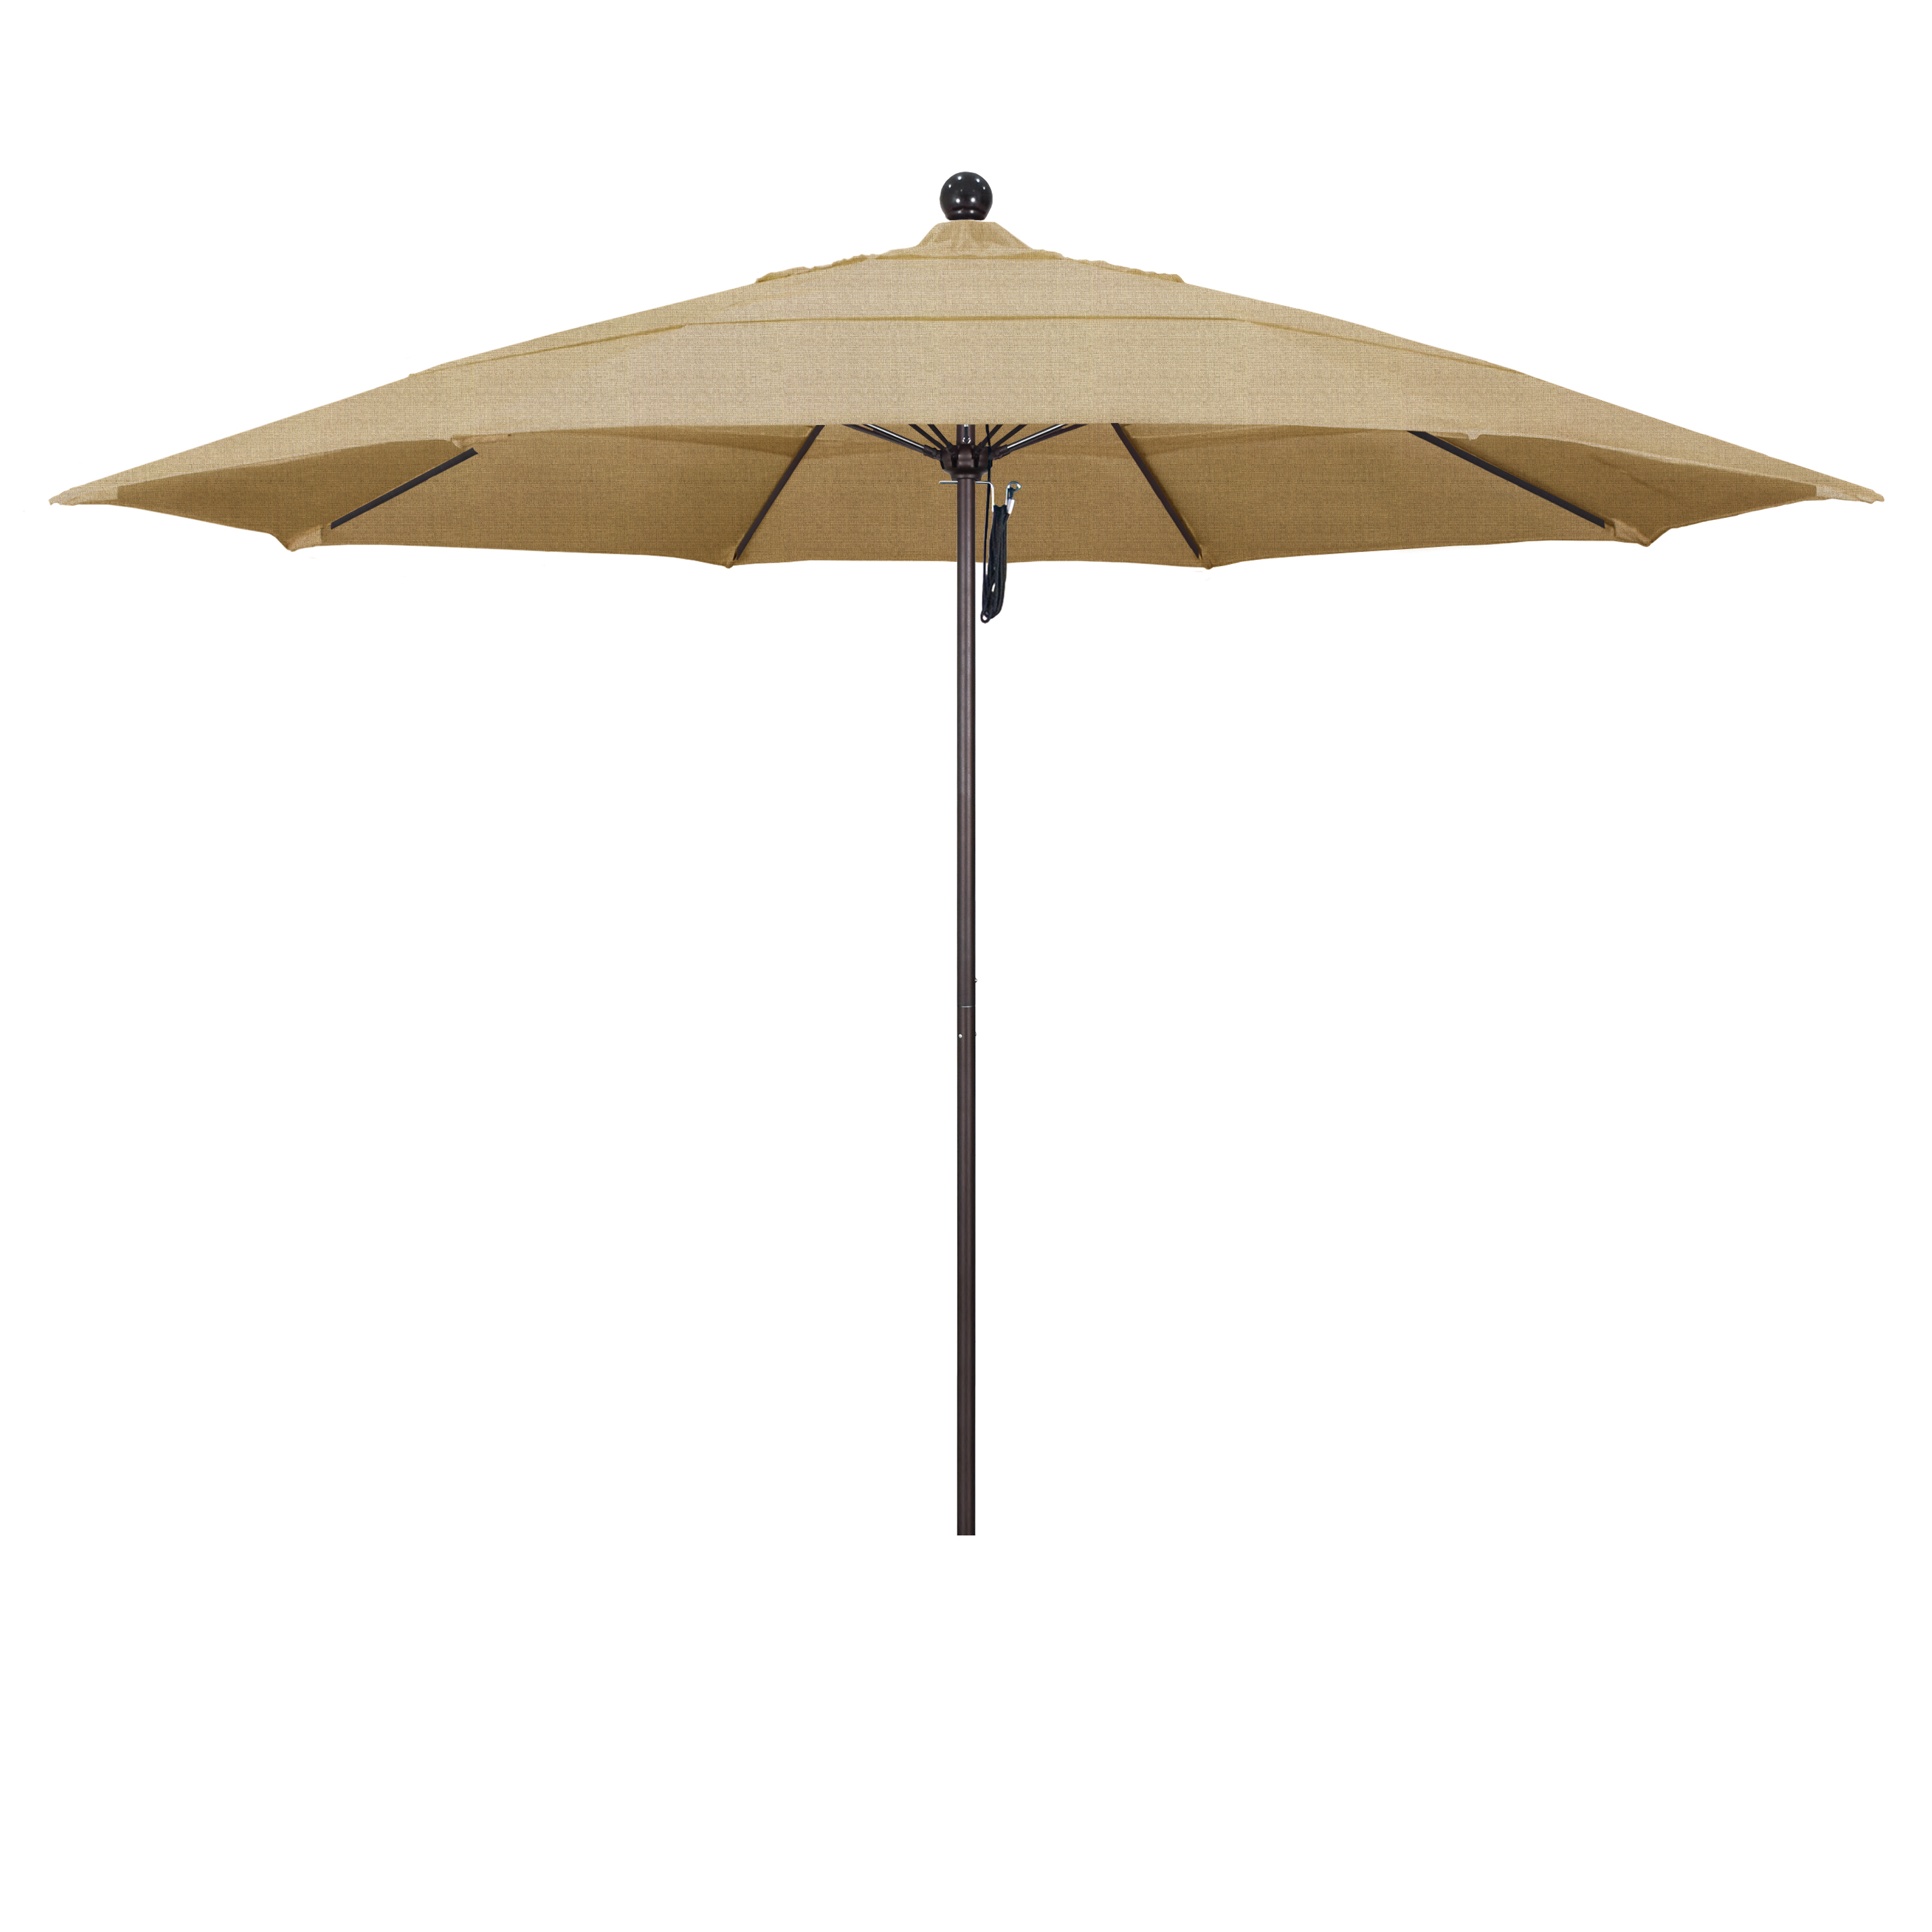 Picture of California Umbrella ALTO118117-8318-DWV 11 ft. Fiberglass Pulley Open Double Vents Market Umbrella - Bronze and Sunbrella-Sesame Linen